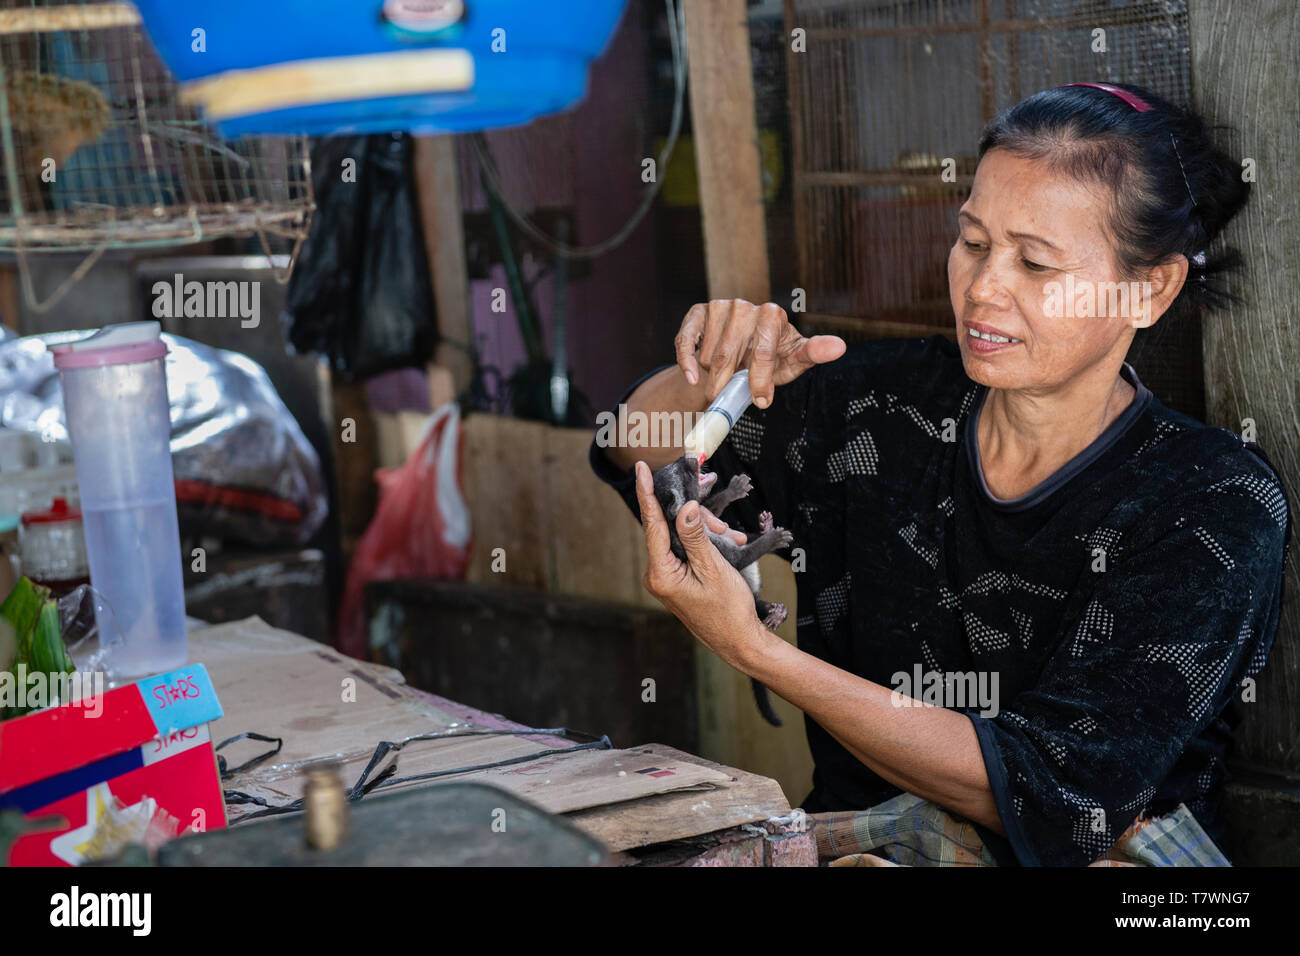 Indonesia, Java , Yogyakarta area, Yogyakarta,woman feeding with a syringe a baby civet to produce the famous coffee Kopi Luwak at bird market Stock Photo